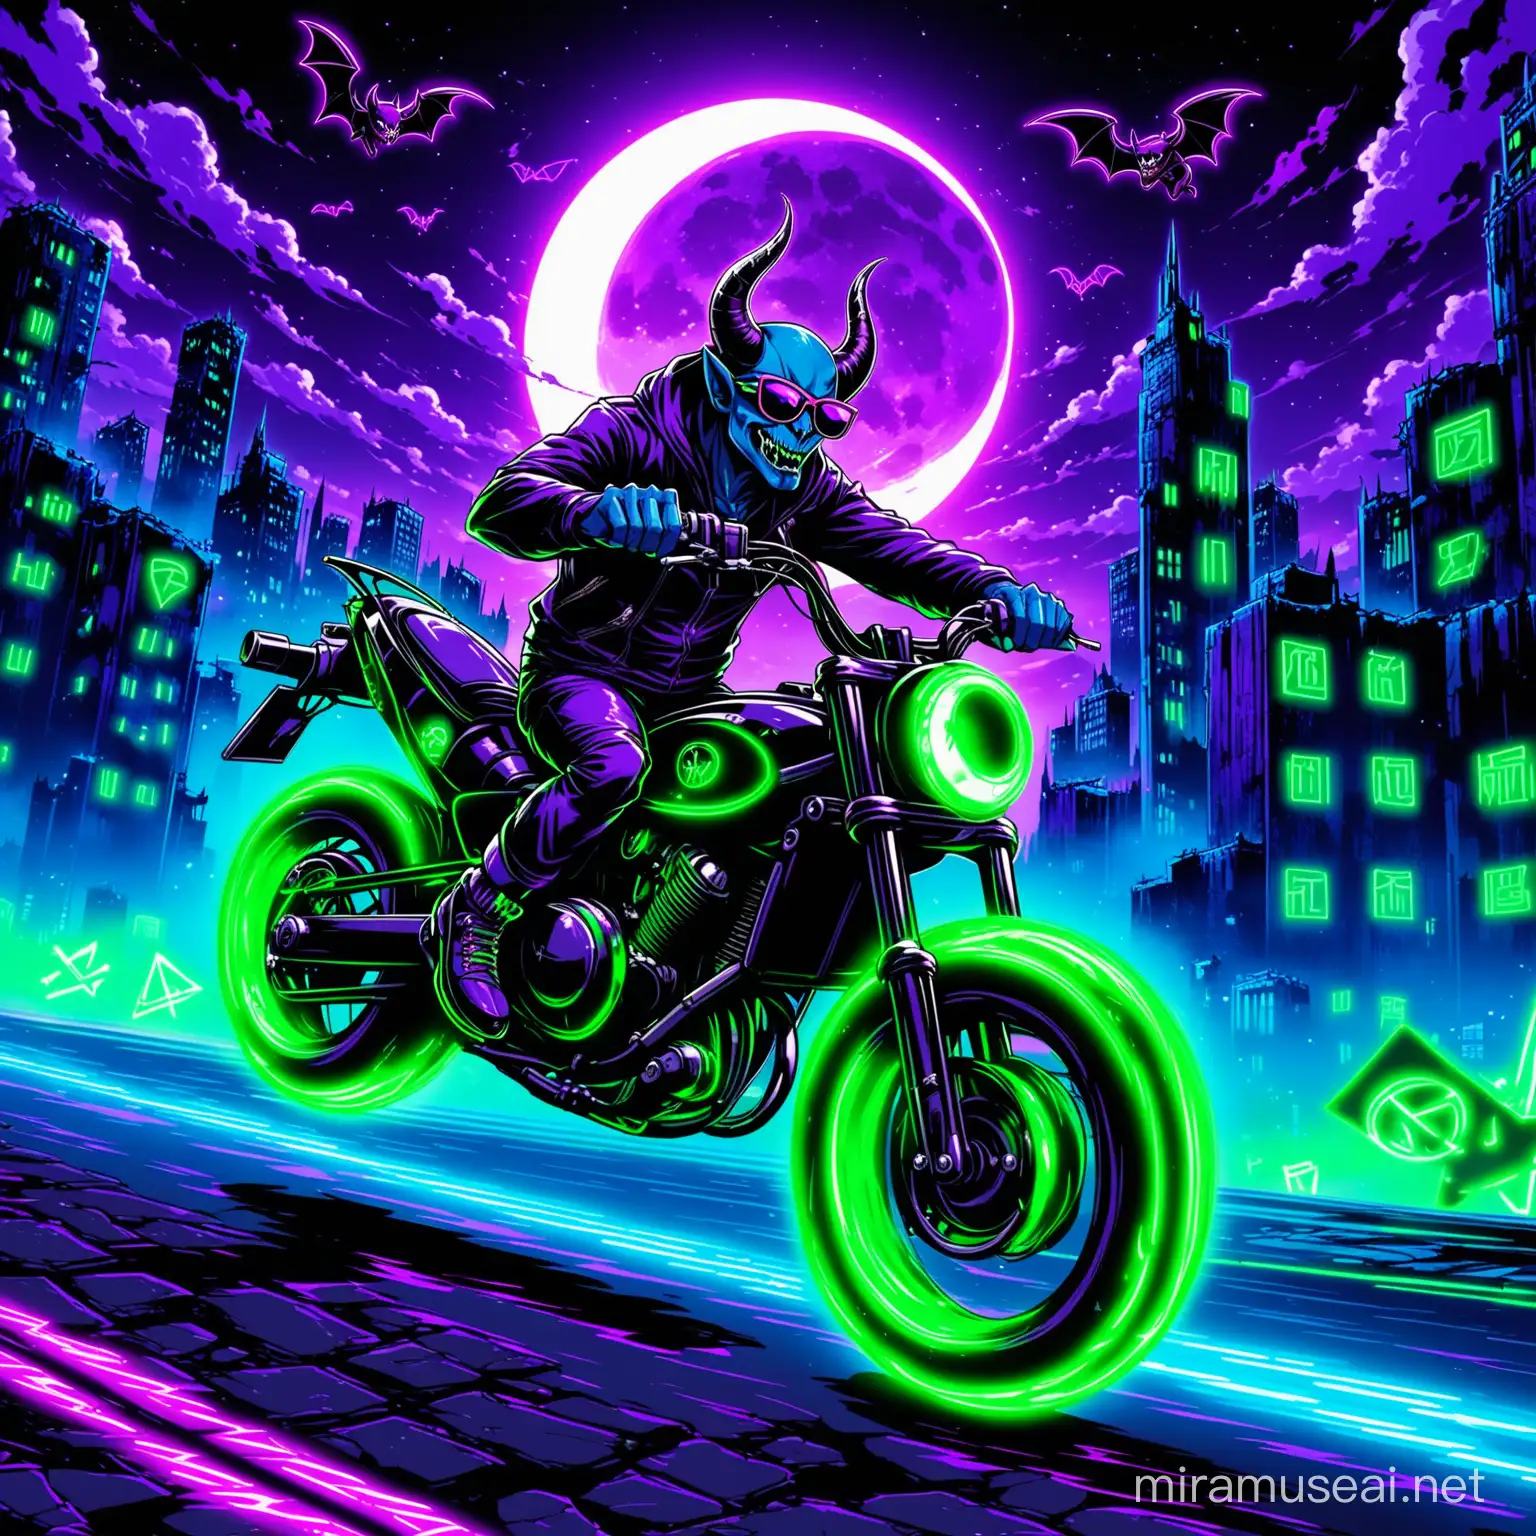 Nebulous Devil on Motorcycle Showcasing Wheelie under a Nocturnal Ruins Sky